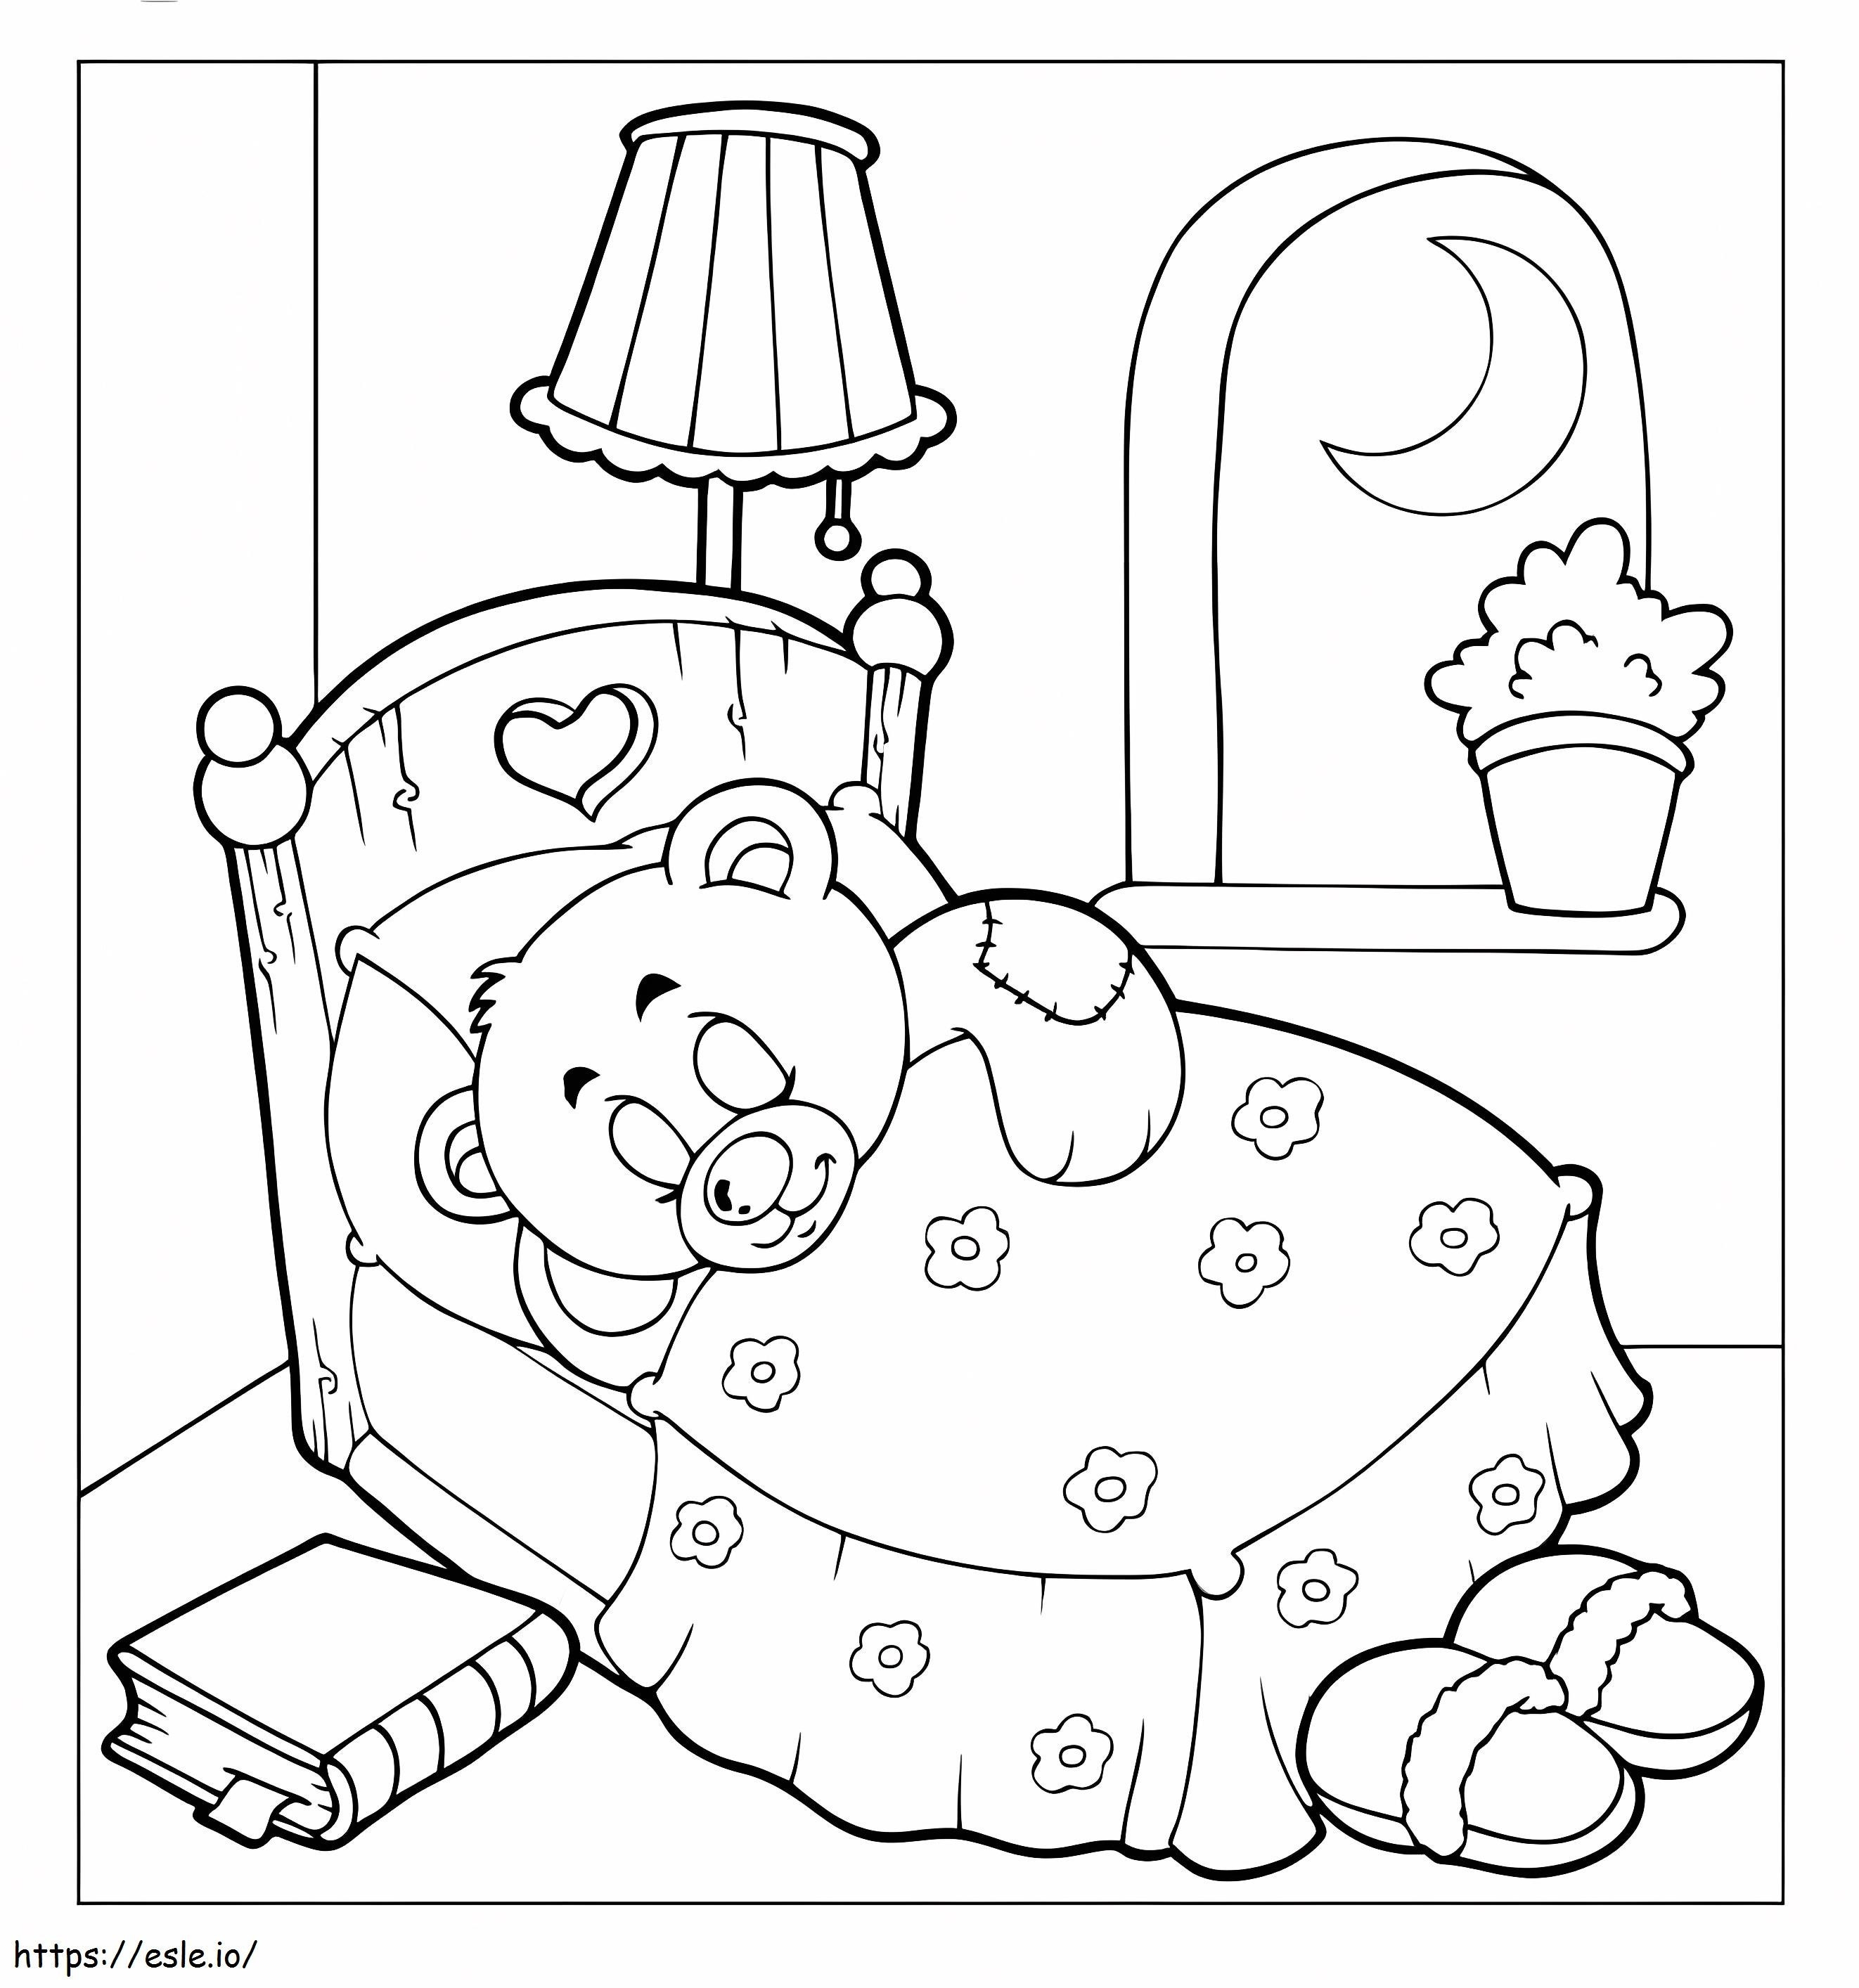 Teddy Bear Sleeping coloring page